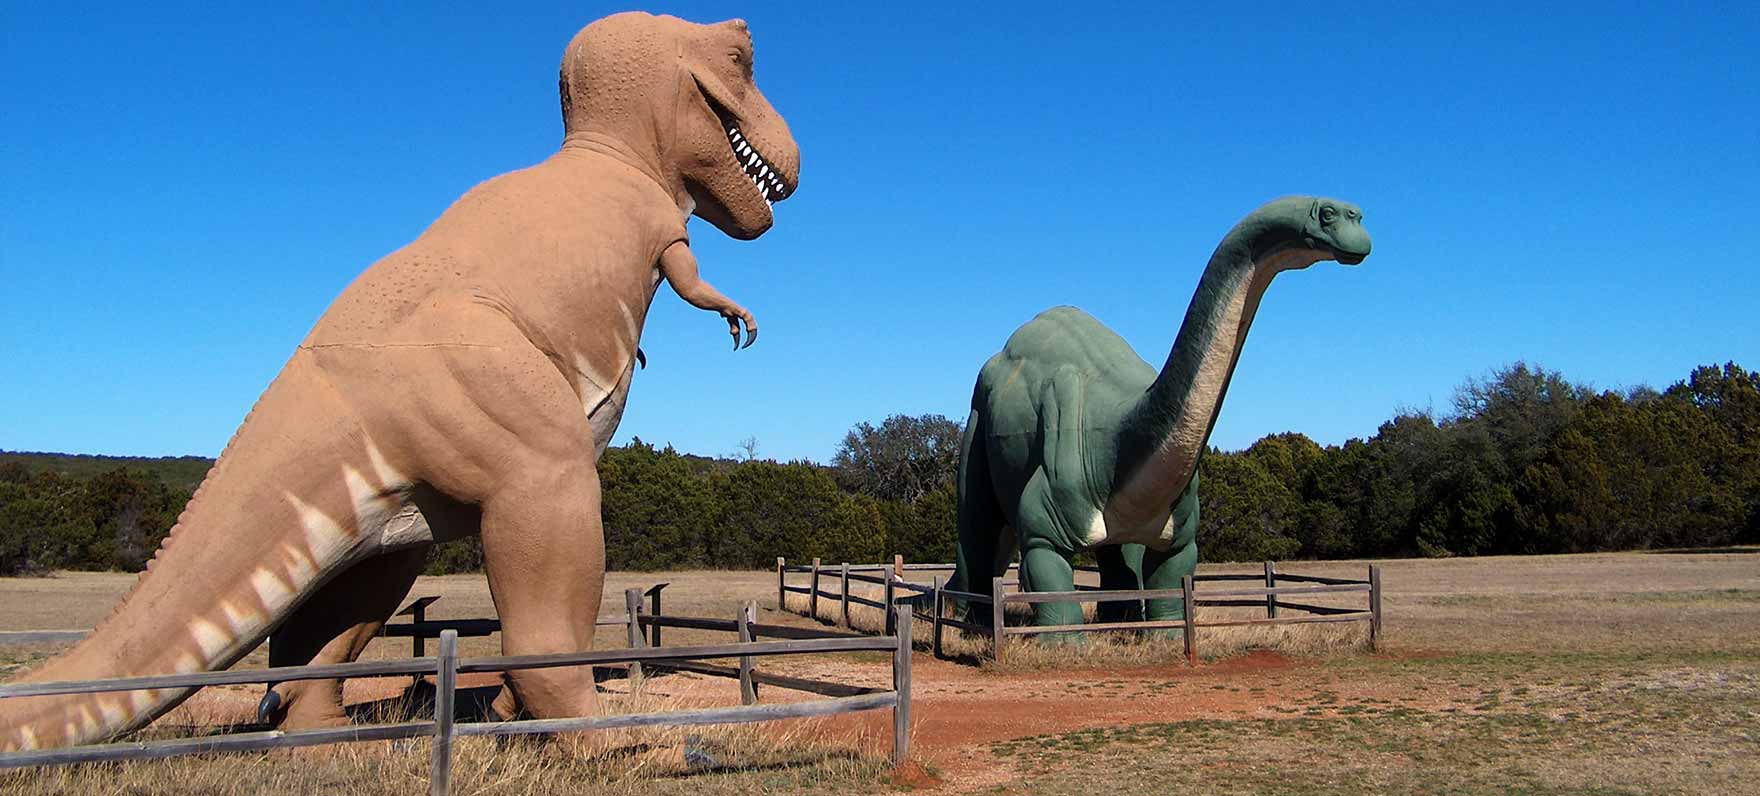 Dinosaur Exhibit at Dinosaur Valley State Park